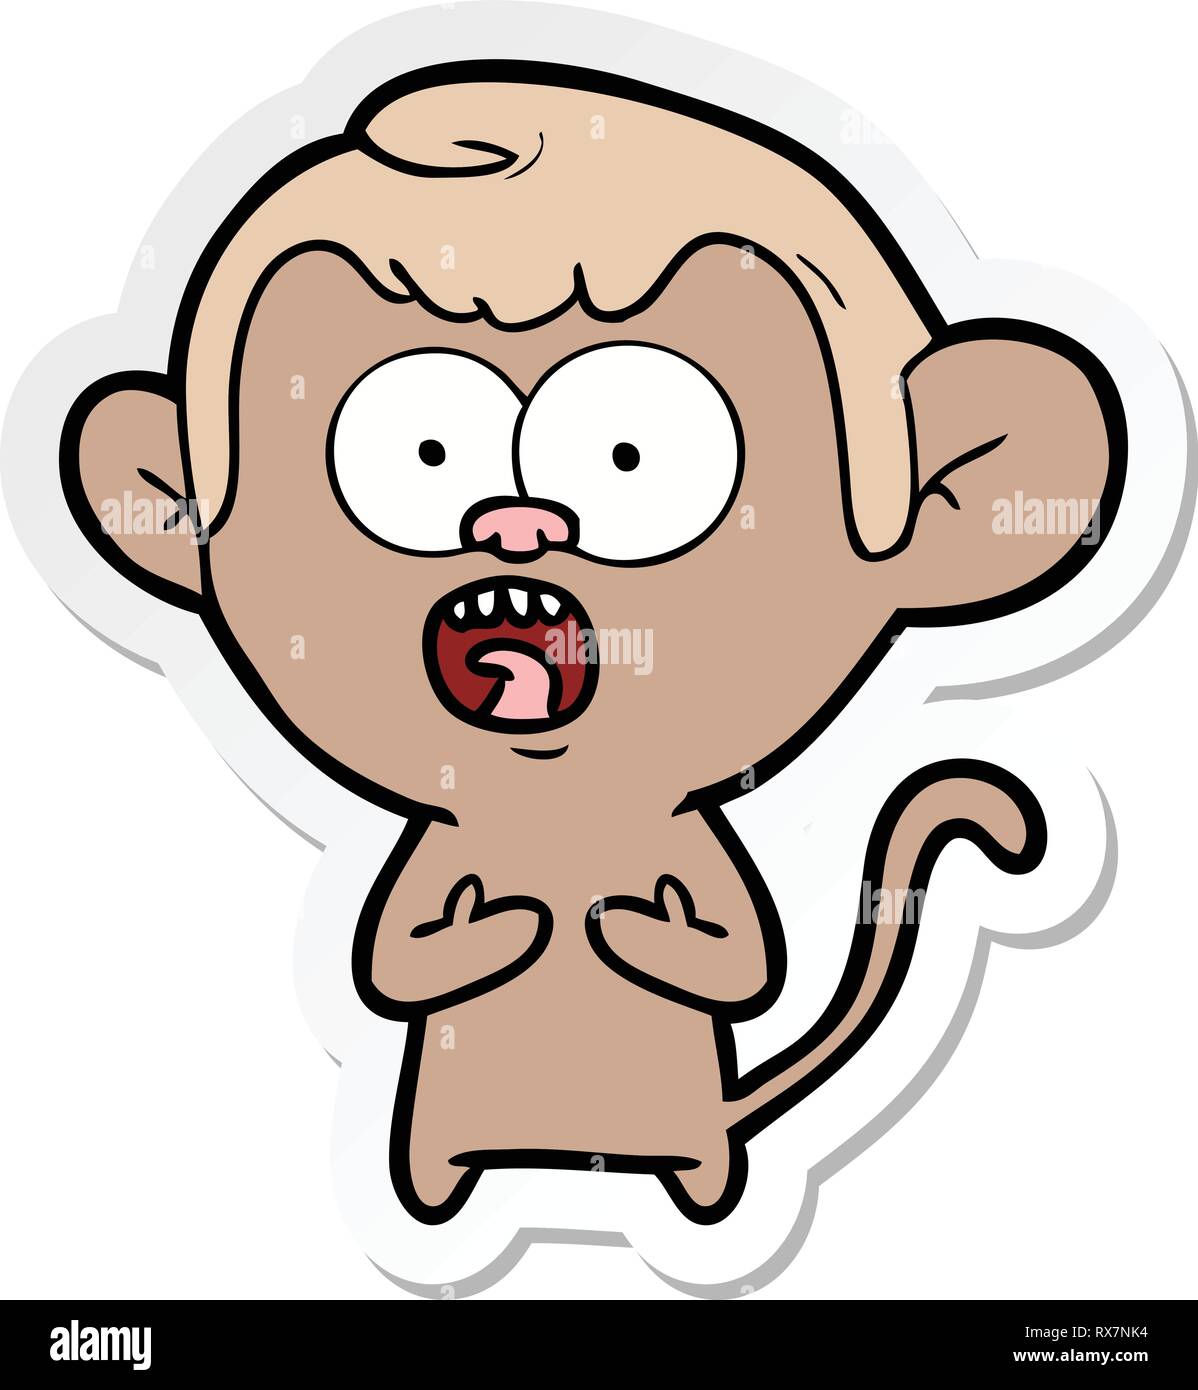 sticker of a cartoon shocked monkey Stock Vector